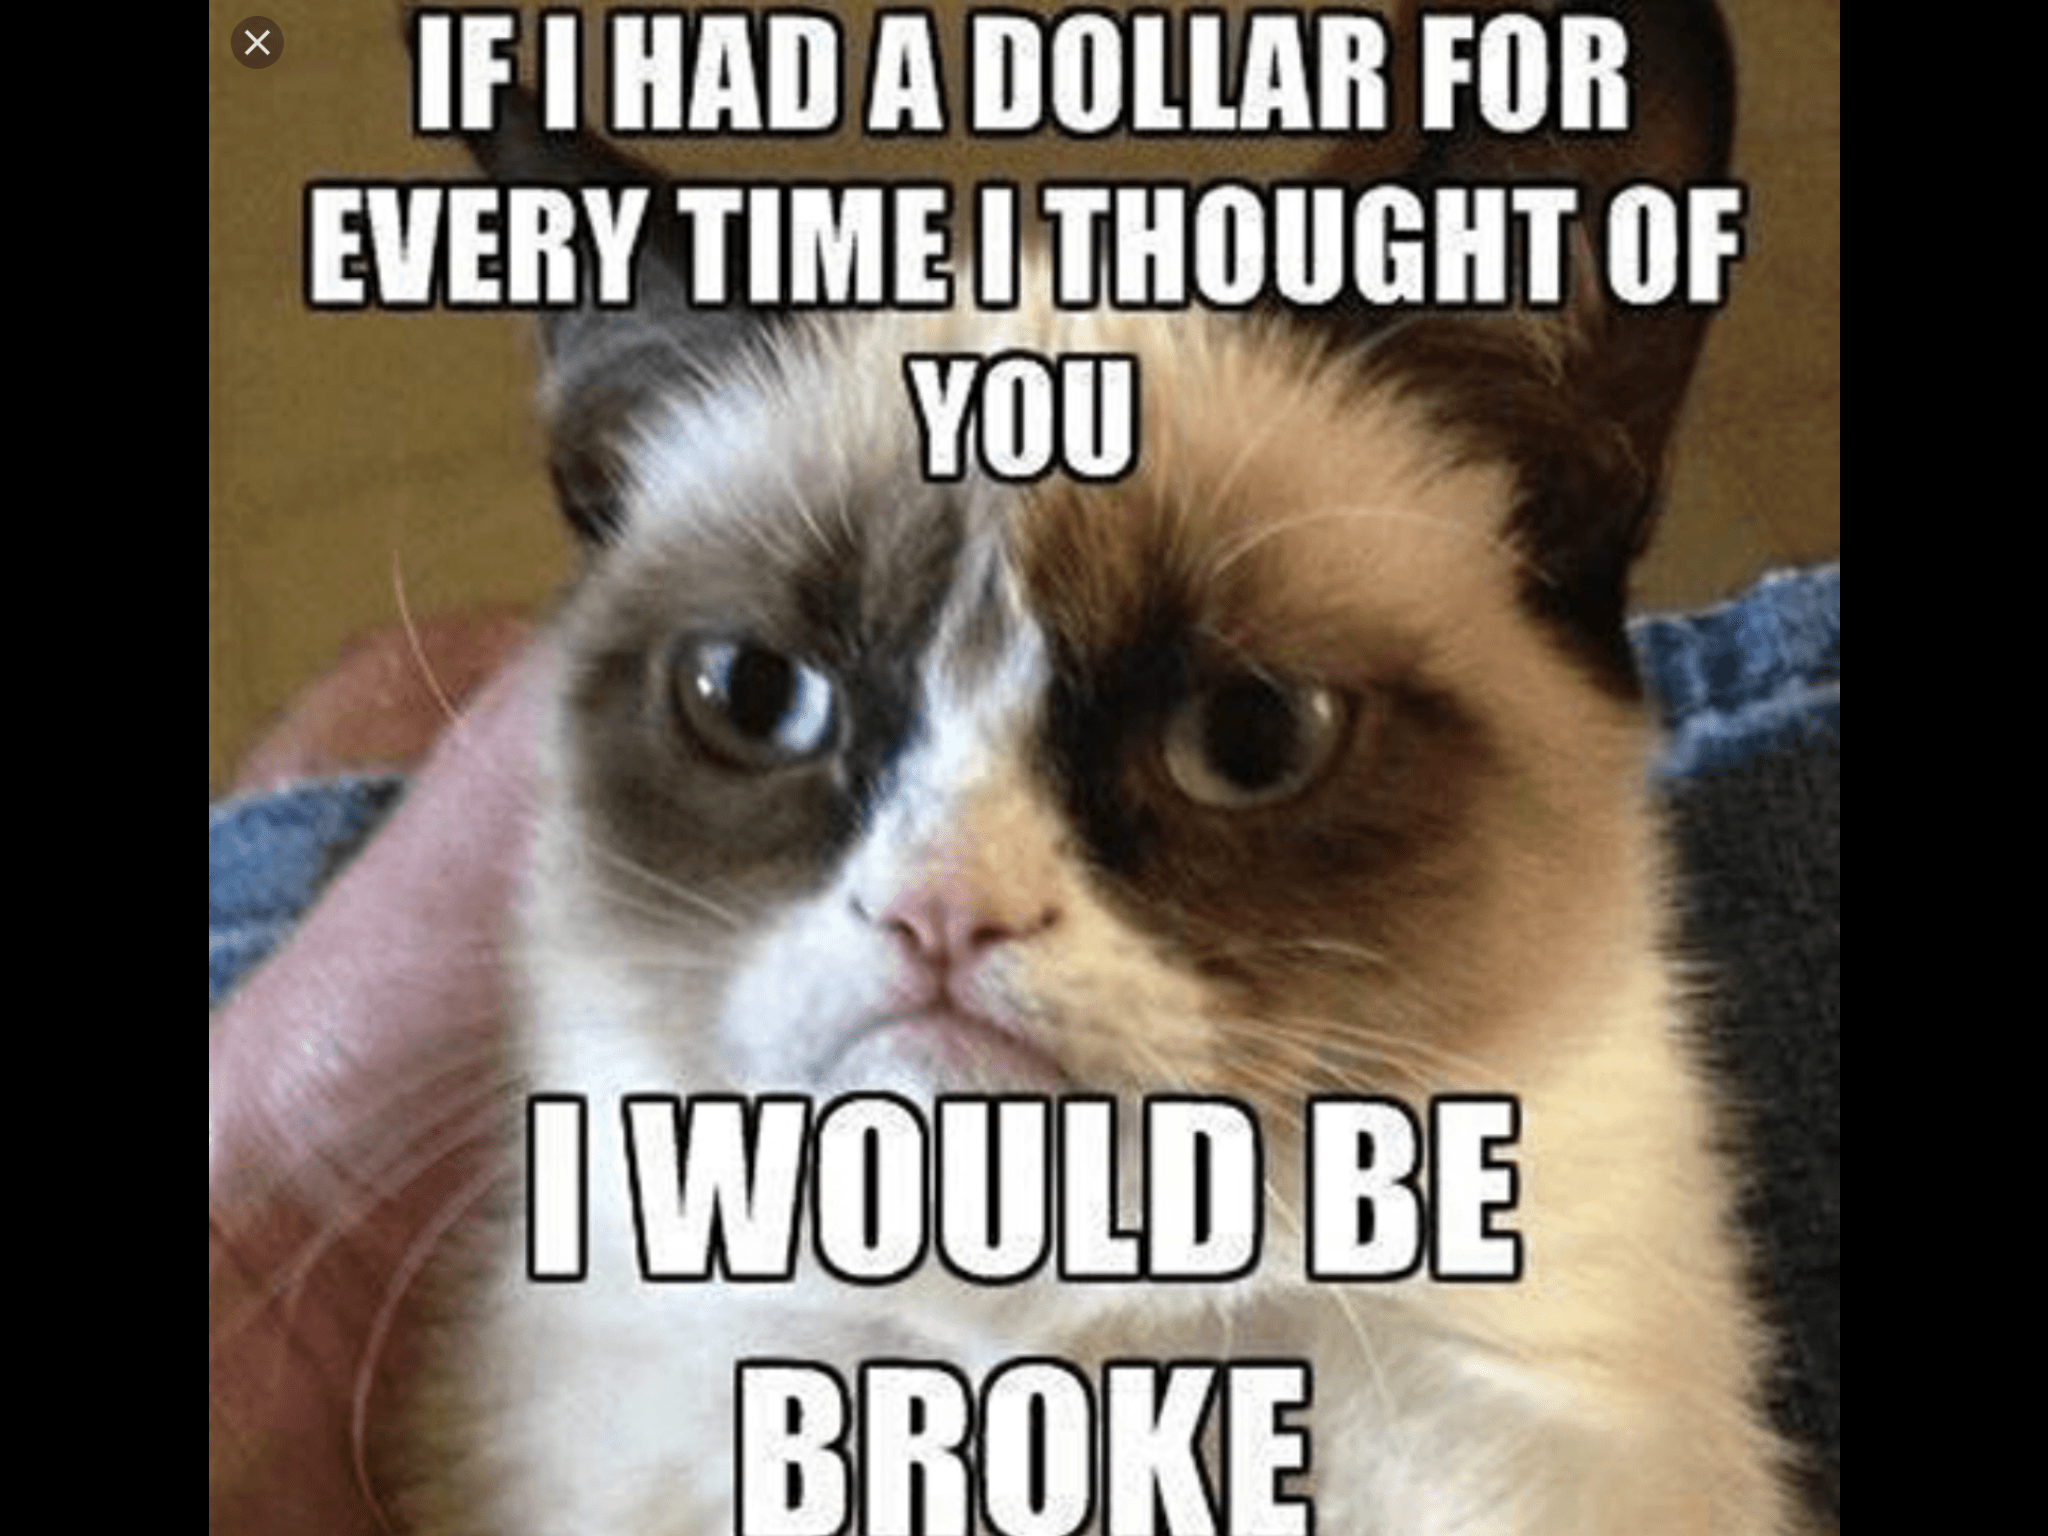 Some of my favorite grumpy cat memes